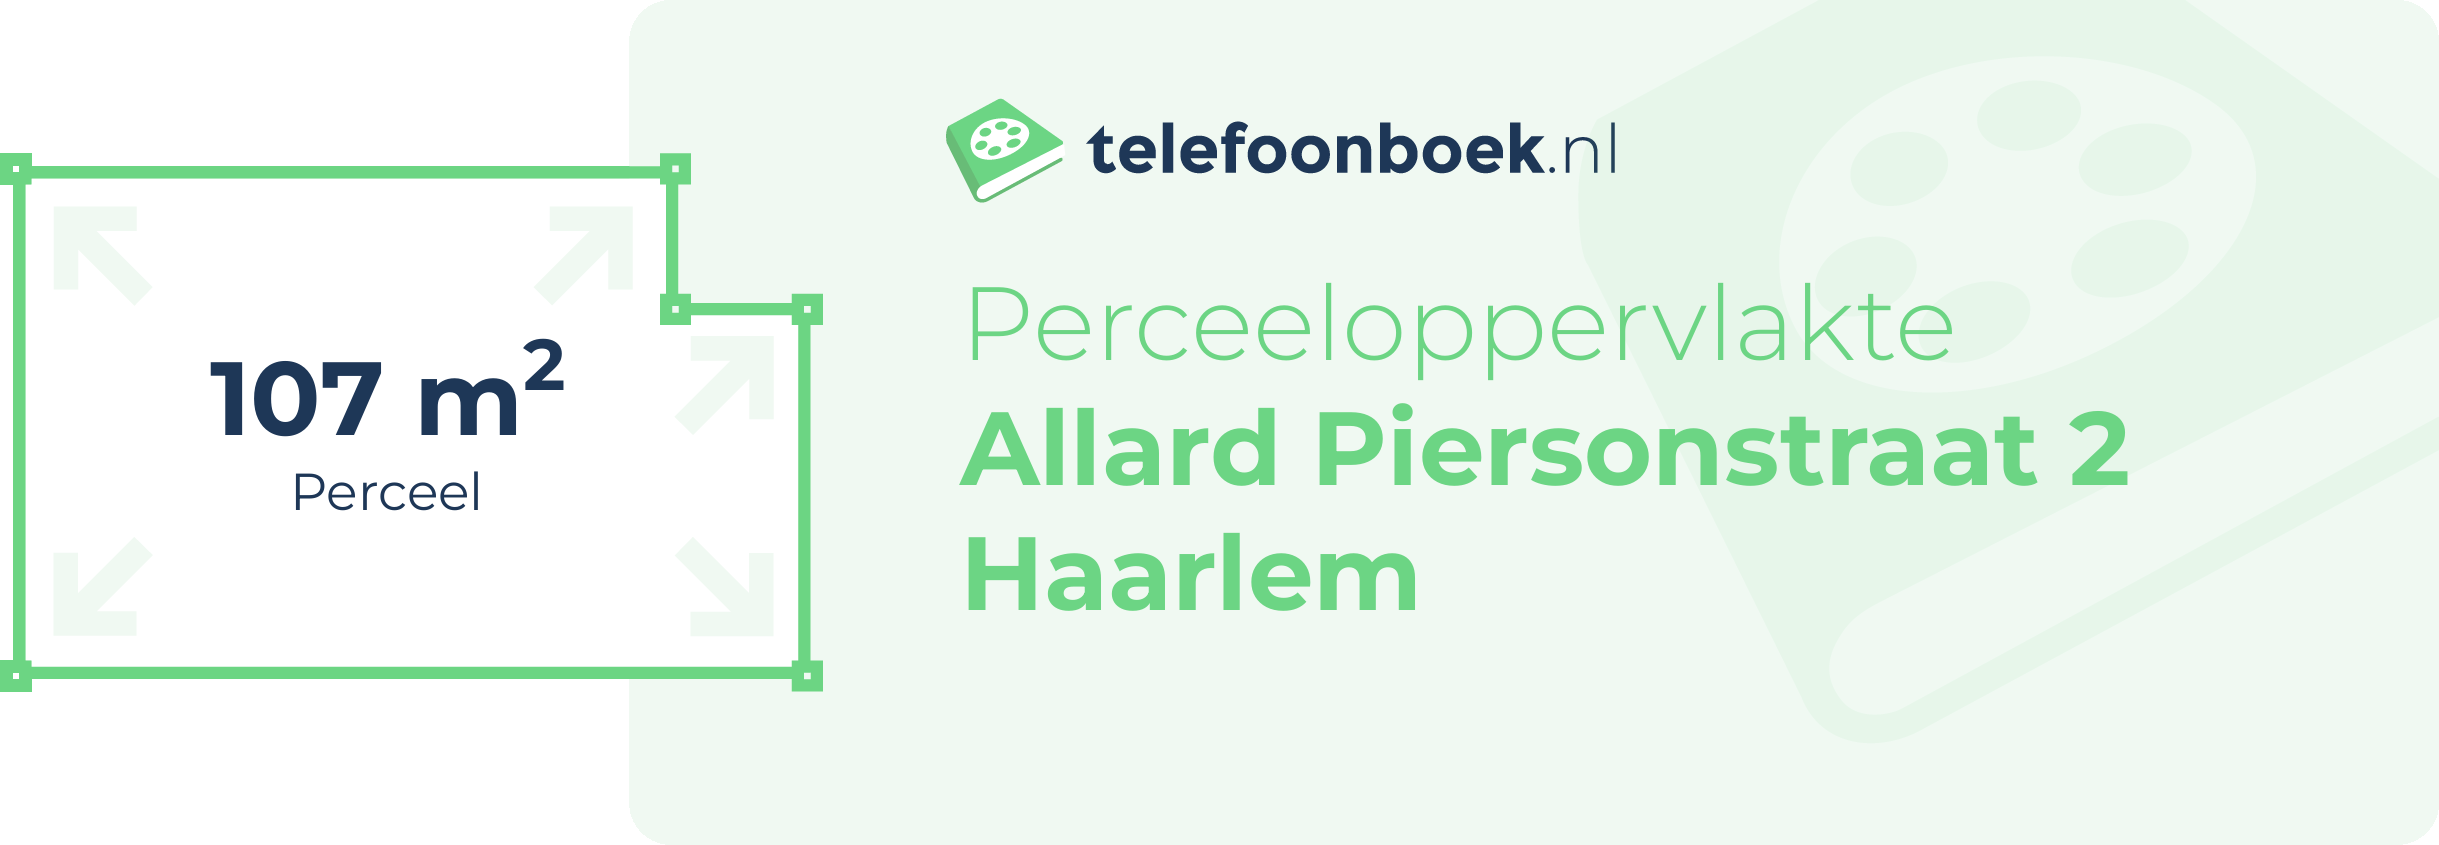 Perceeloppervlakte Allard Piersonstraat 2 Haarlem